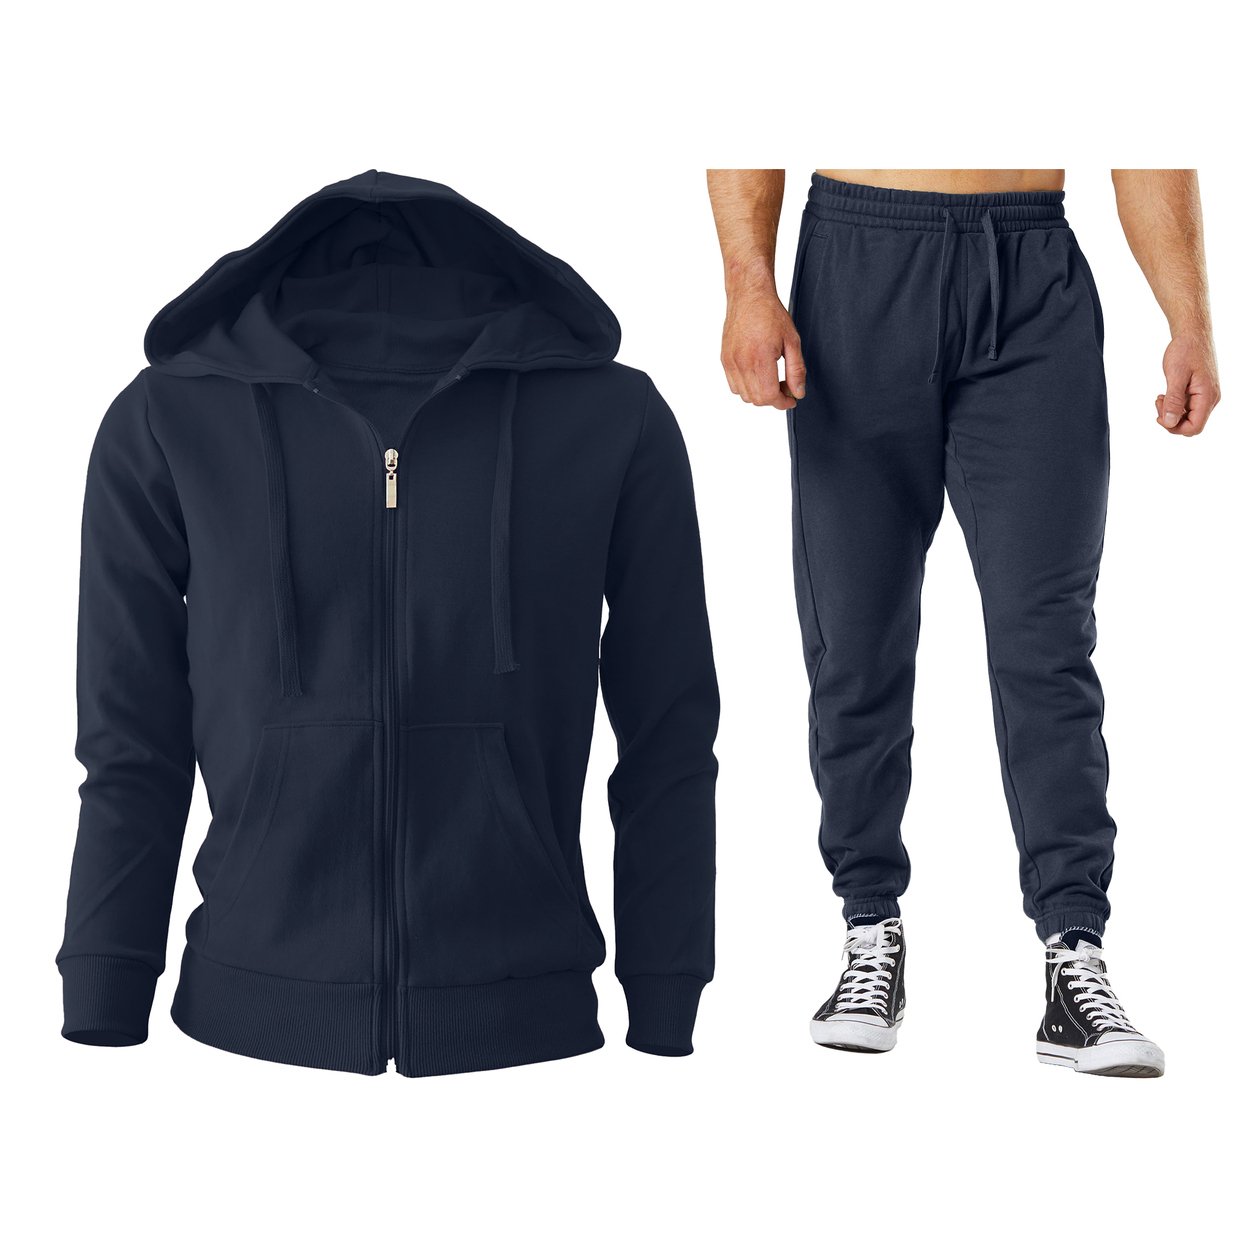 2/4-Piece: Men's Winter Warm Cozy Athletic Multi-Pockets BIG & TALL Sweatsuit Set - Navy, 1, X-large